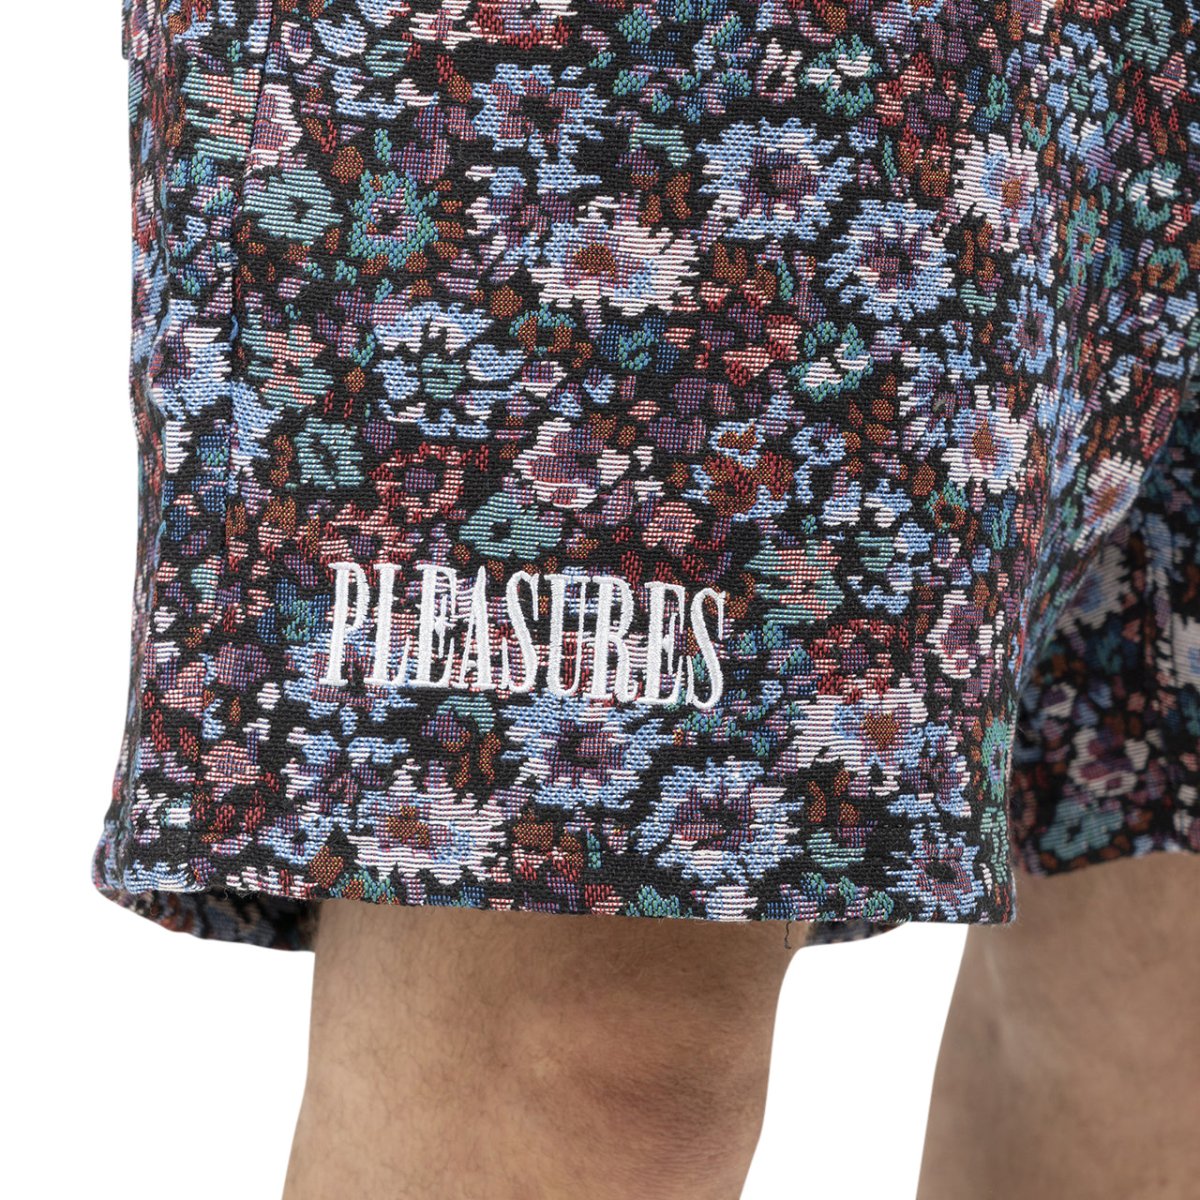 Pleasures Quitter Floral Shorts (Schwarz)  - Allike Store